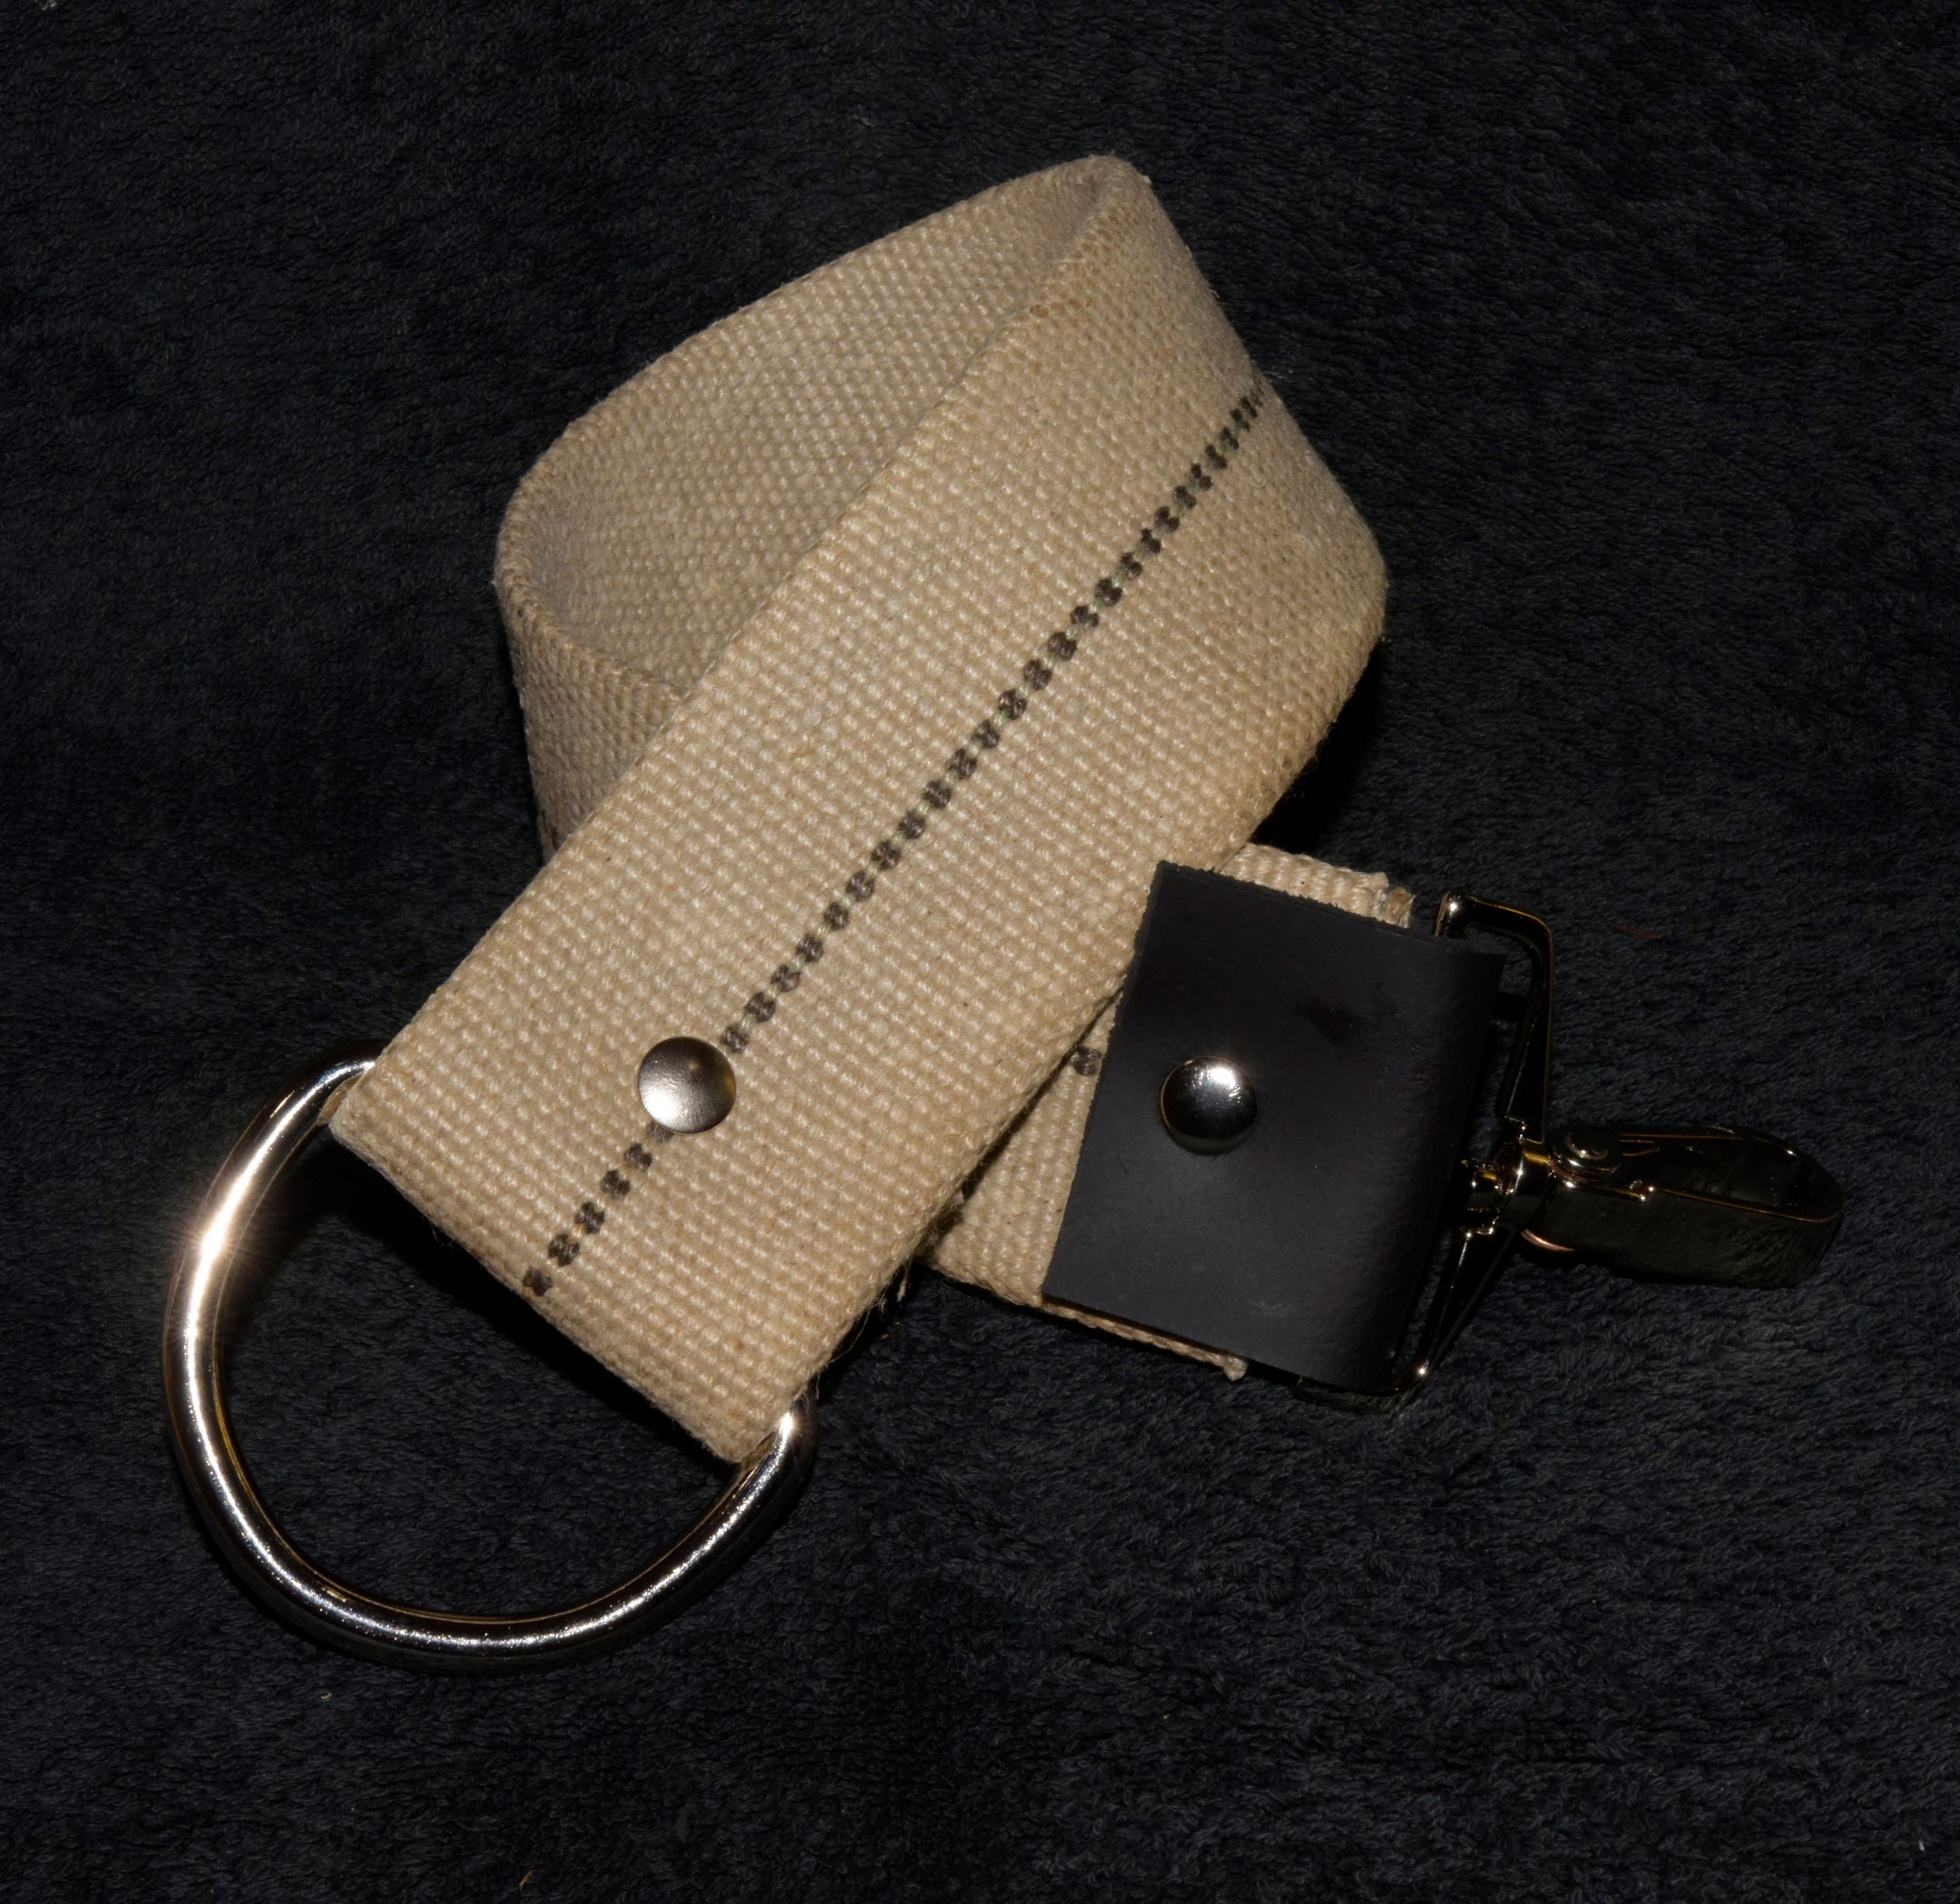 Kangaroo Leather Strop Paddle With Diamond Sharpening Compound gunny Juice  